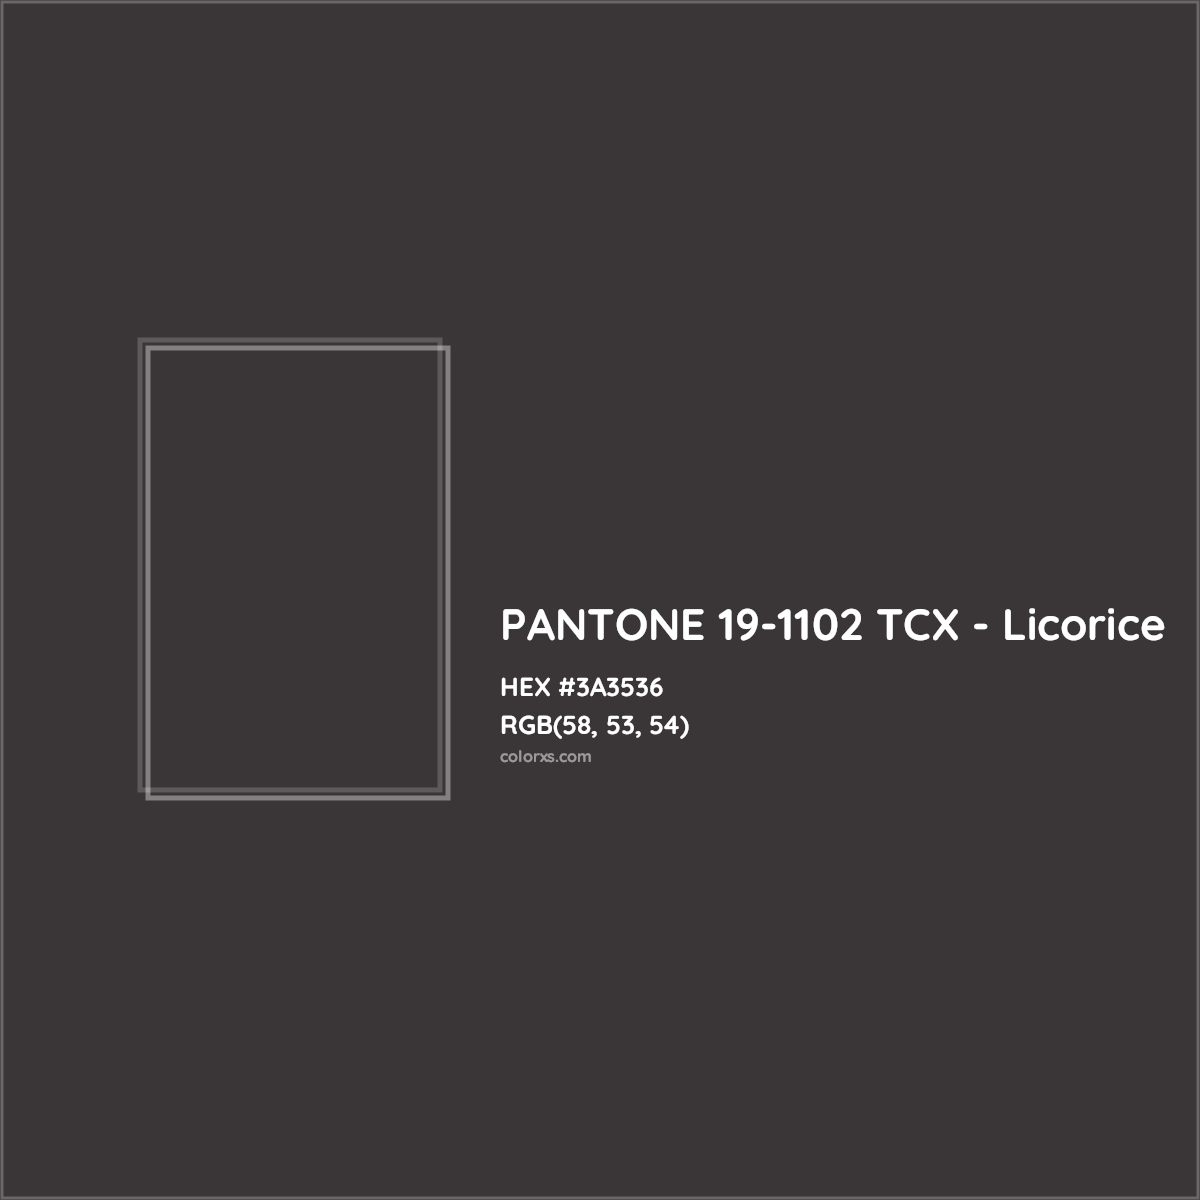 HEX #3A3536 PANTONE 19-1102 TCX - Licorice CMS Pantone TCX - Color Code